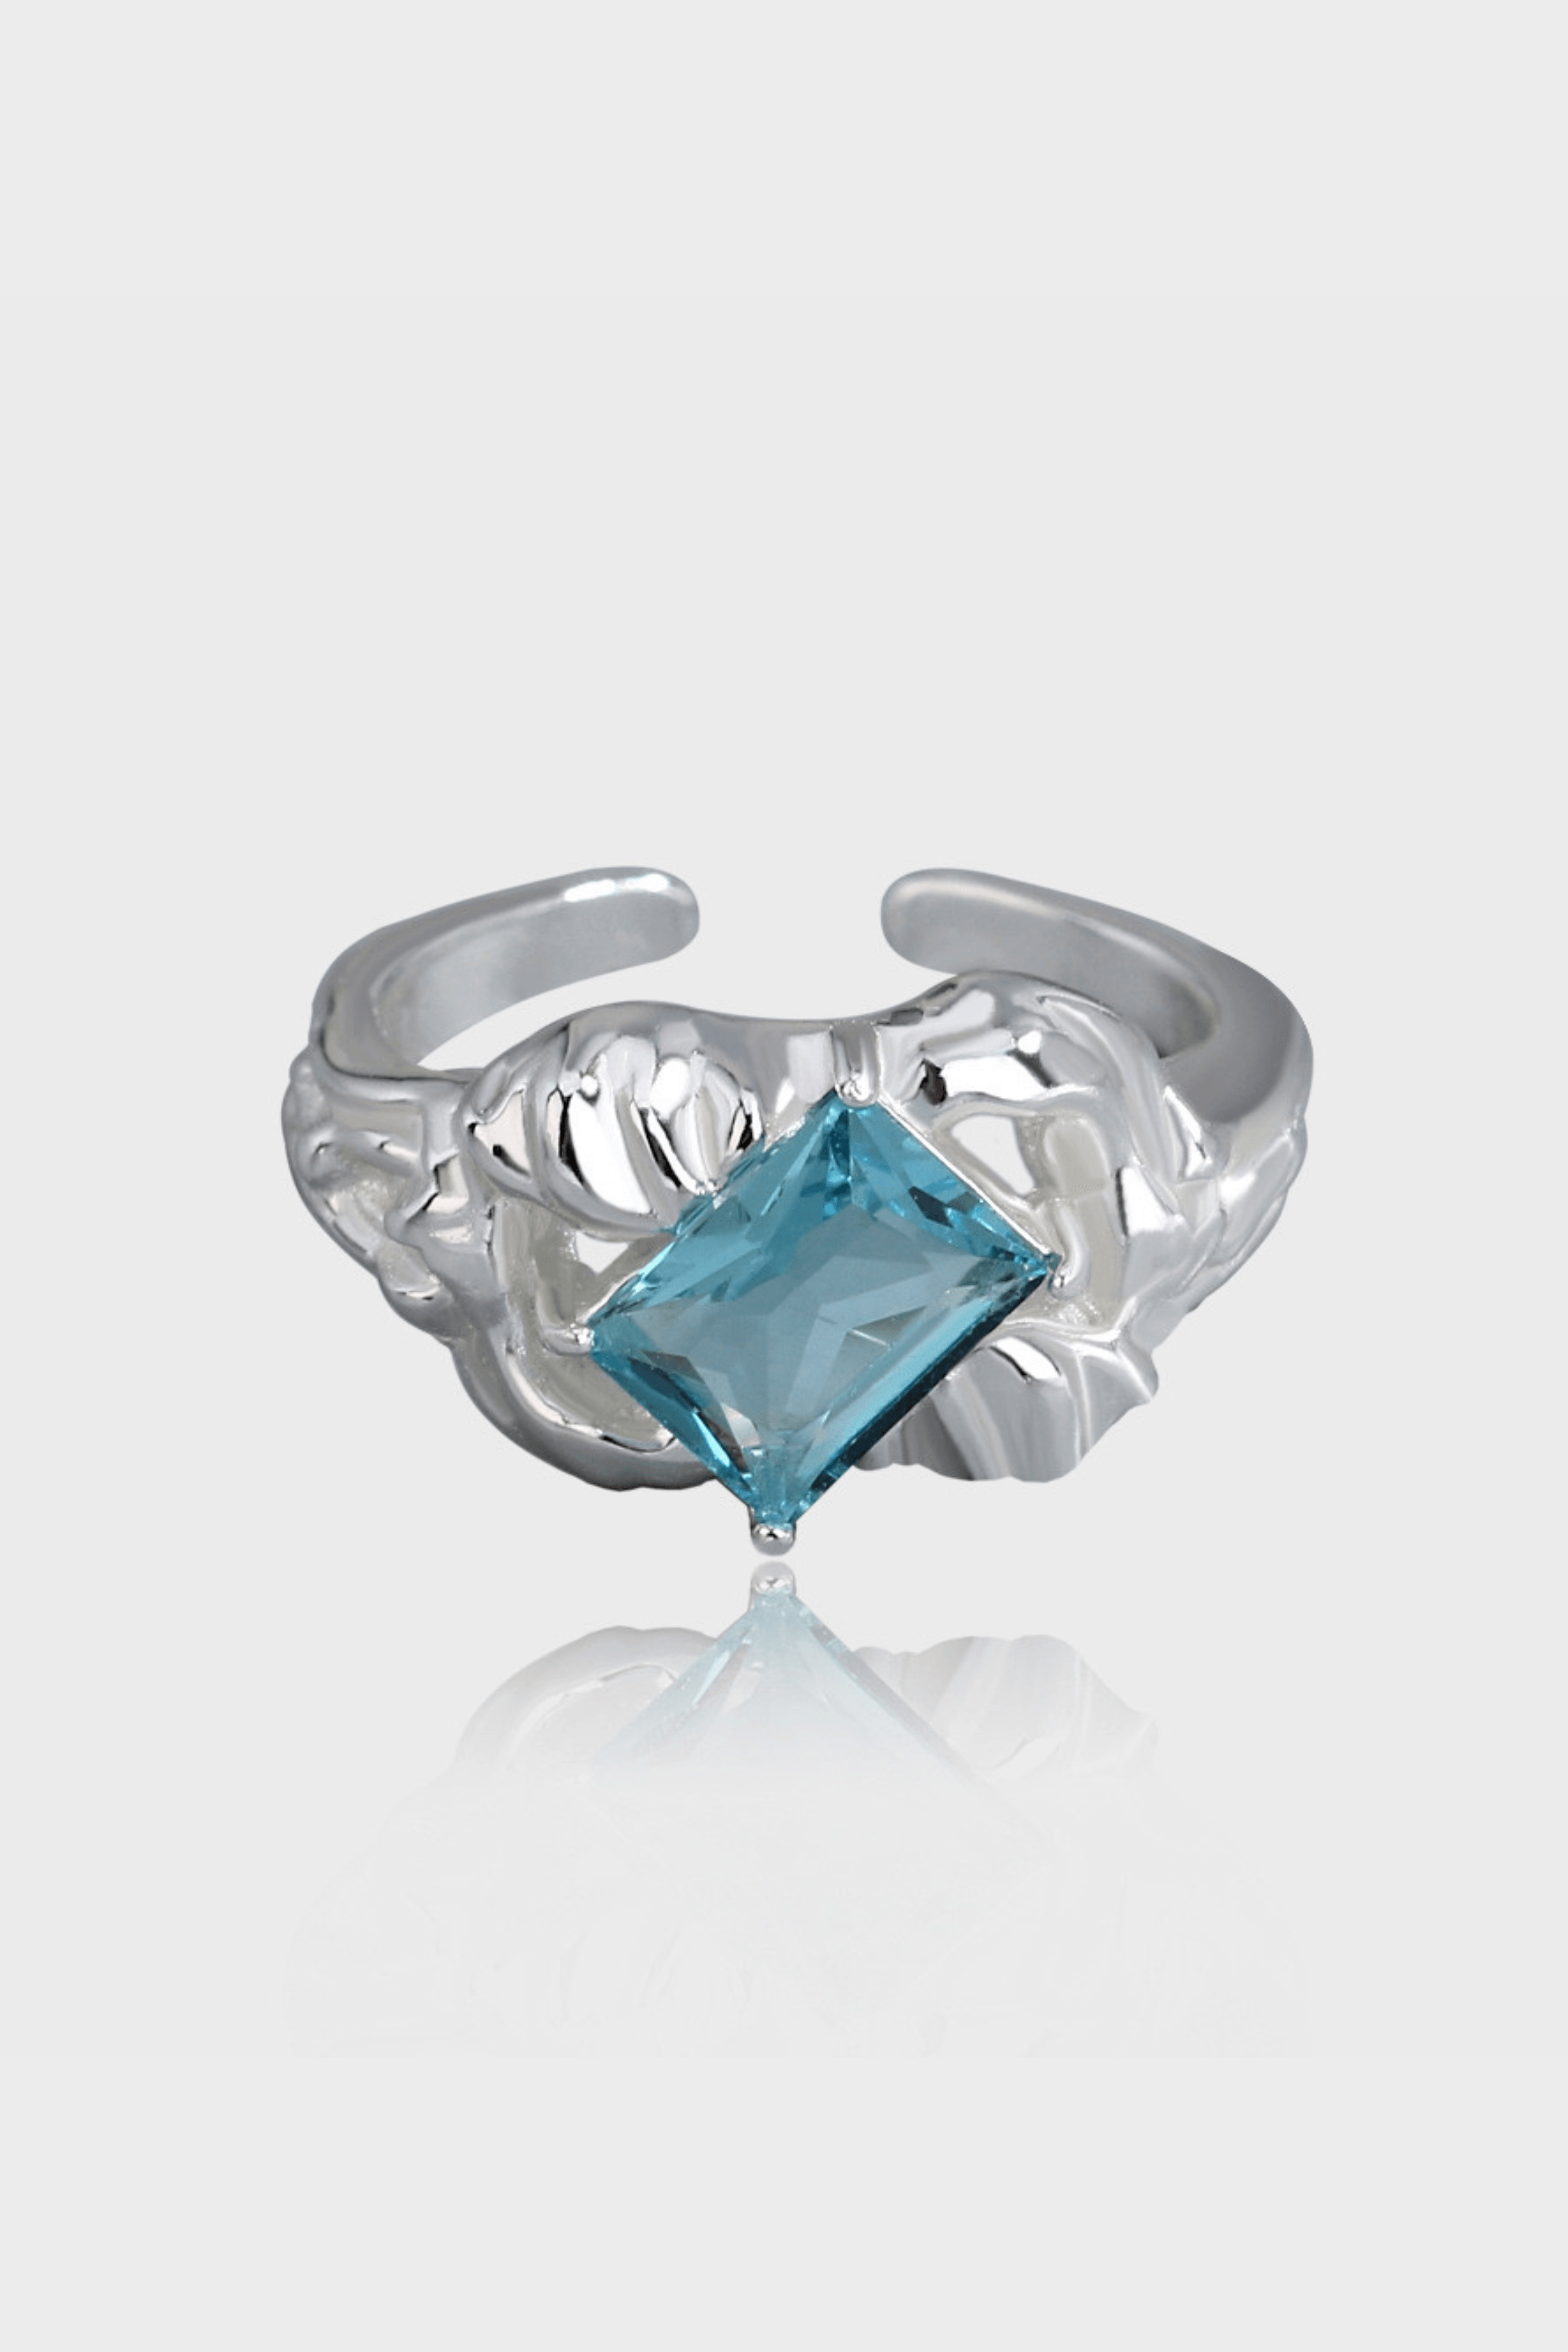 Blue Square Diamond Silver Ring - Cutethingscommin